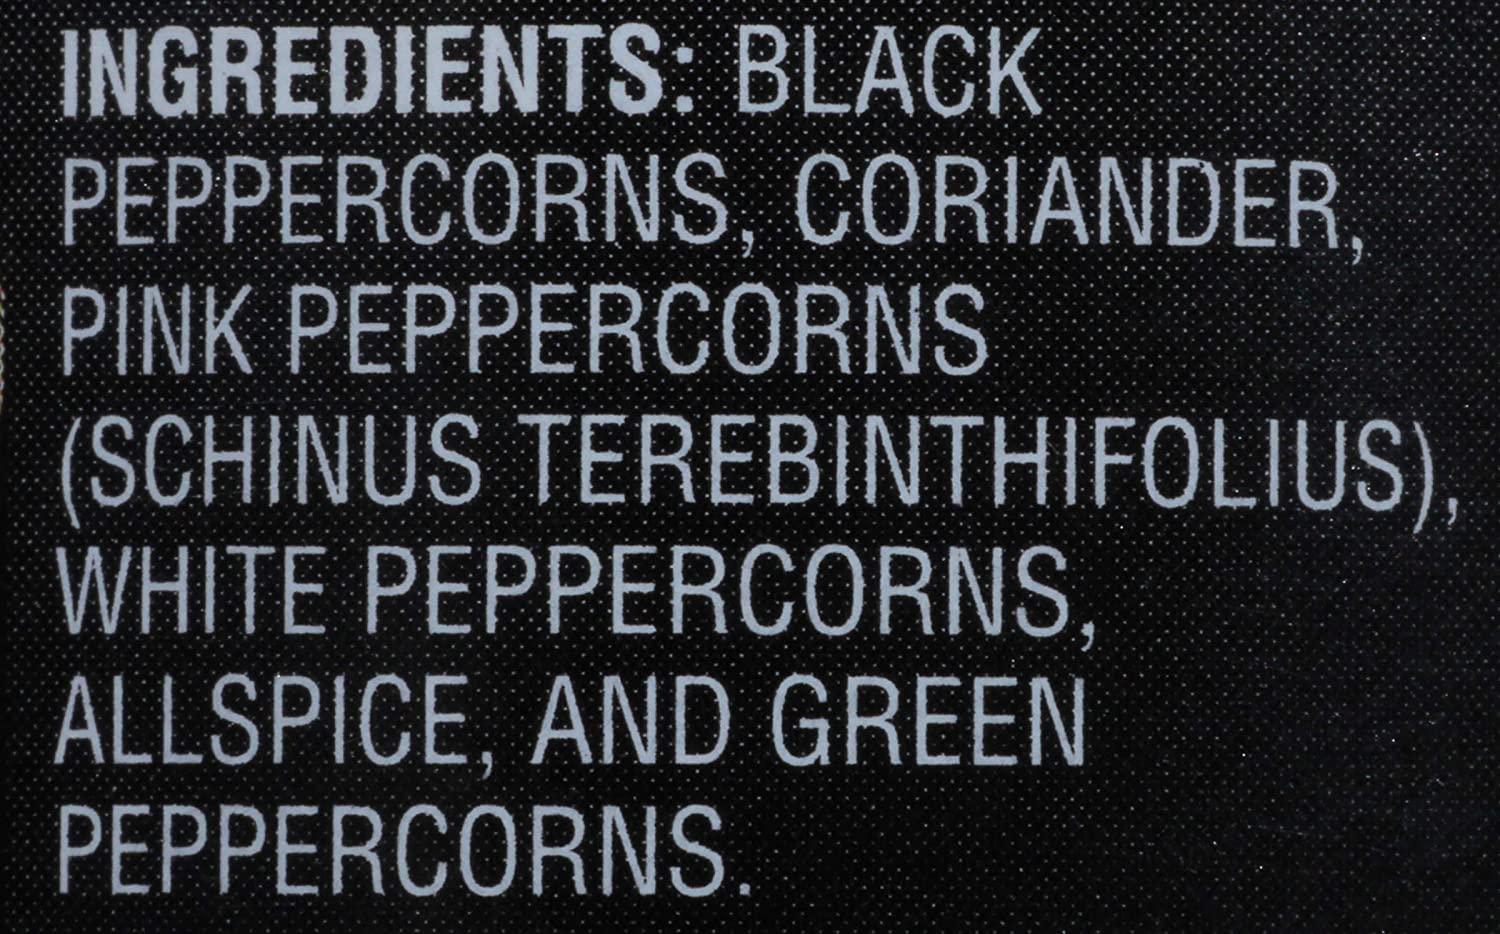 McCormick Peppercorn Medley Grinder (0.85 oz)